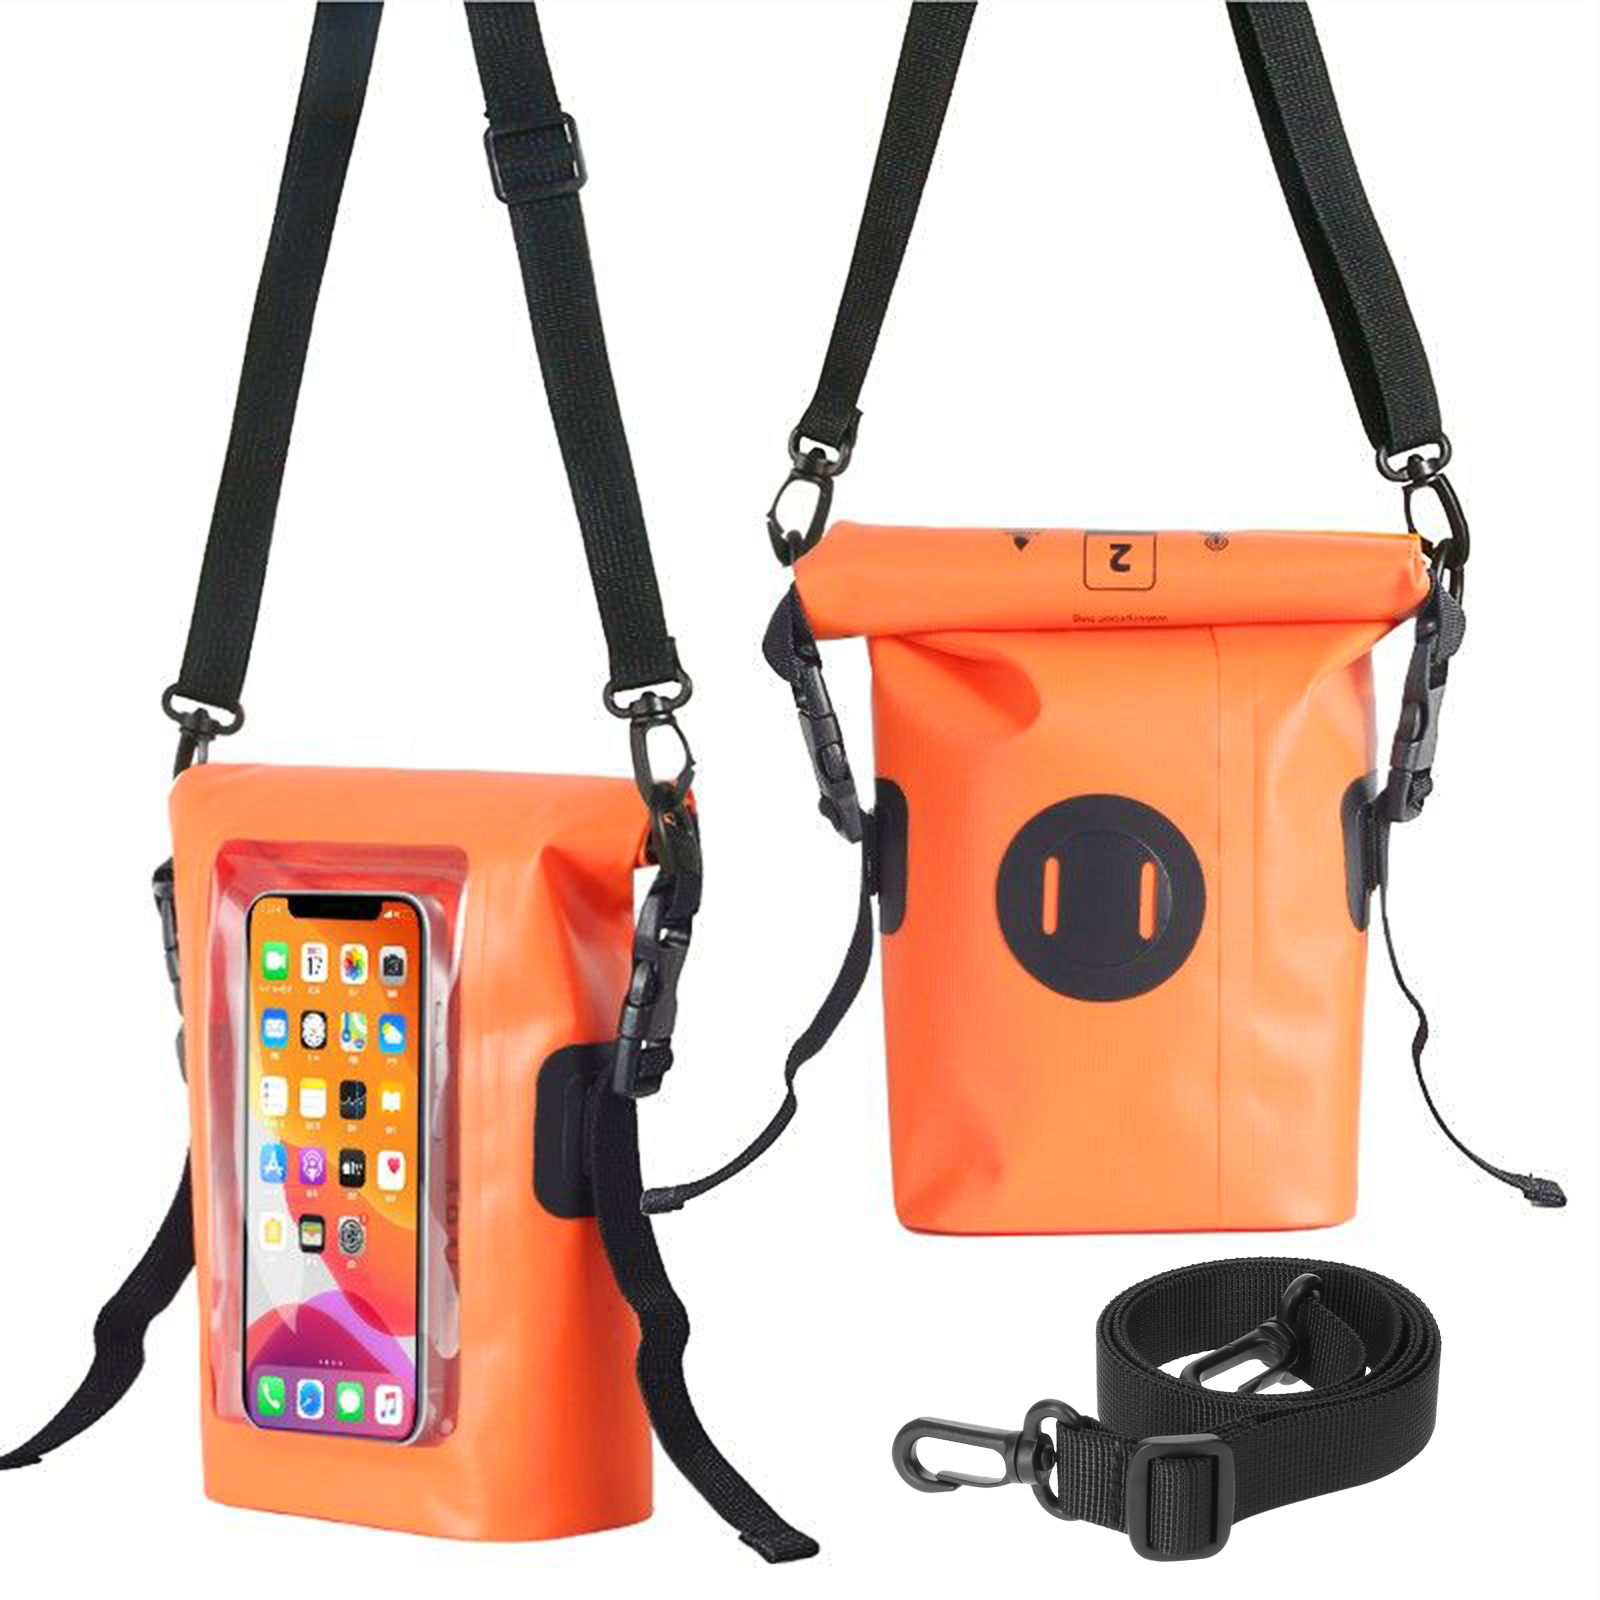 sac etanche pour telephone Portable avec ecran tactile - S2A